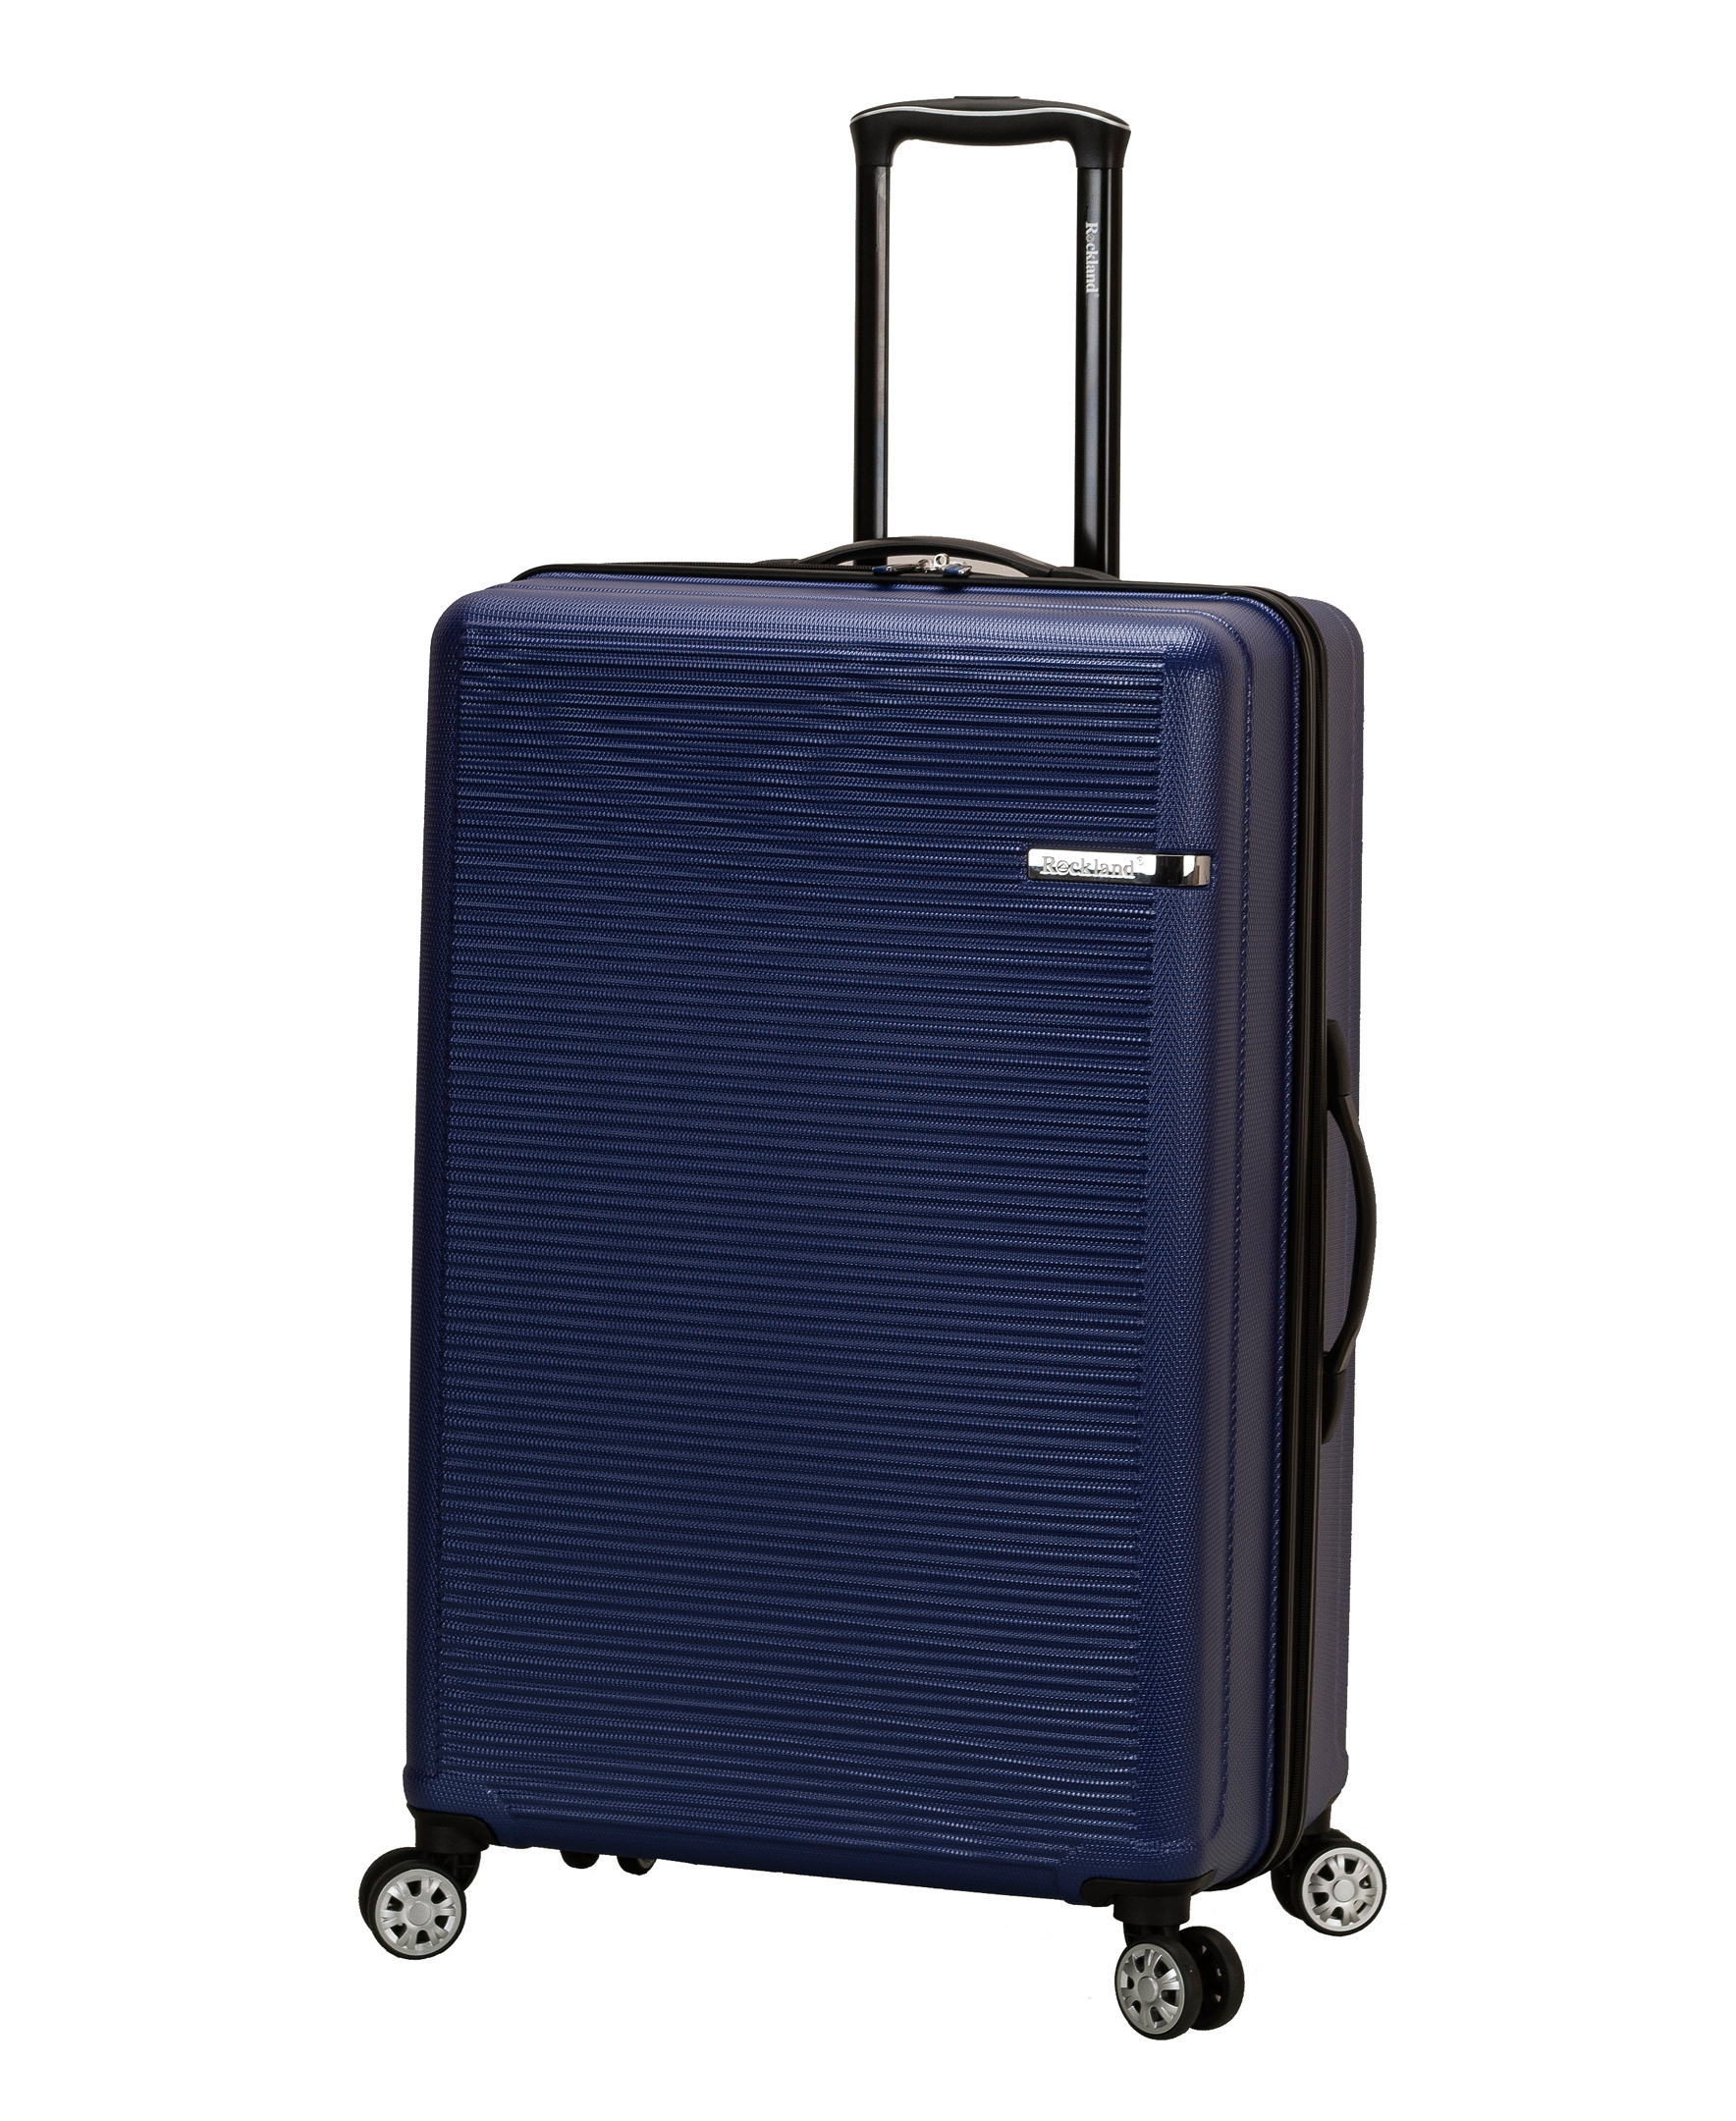 Rockland Luggage Skyline 3 Piece Hardside ABS Non-Expandable Luggage ...